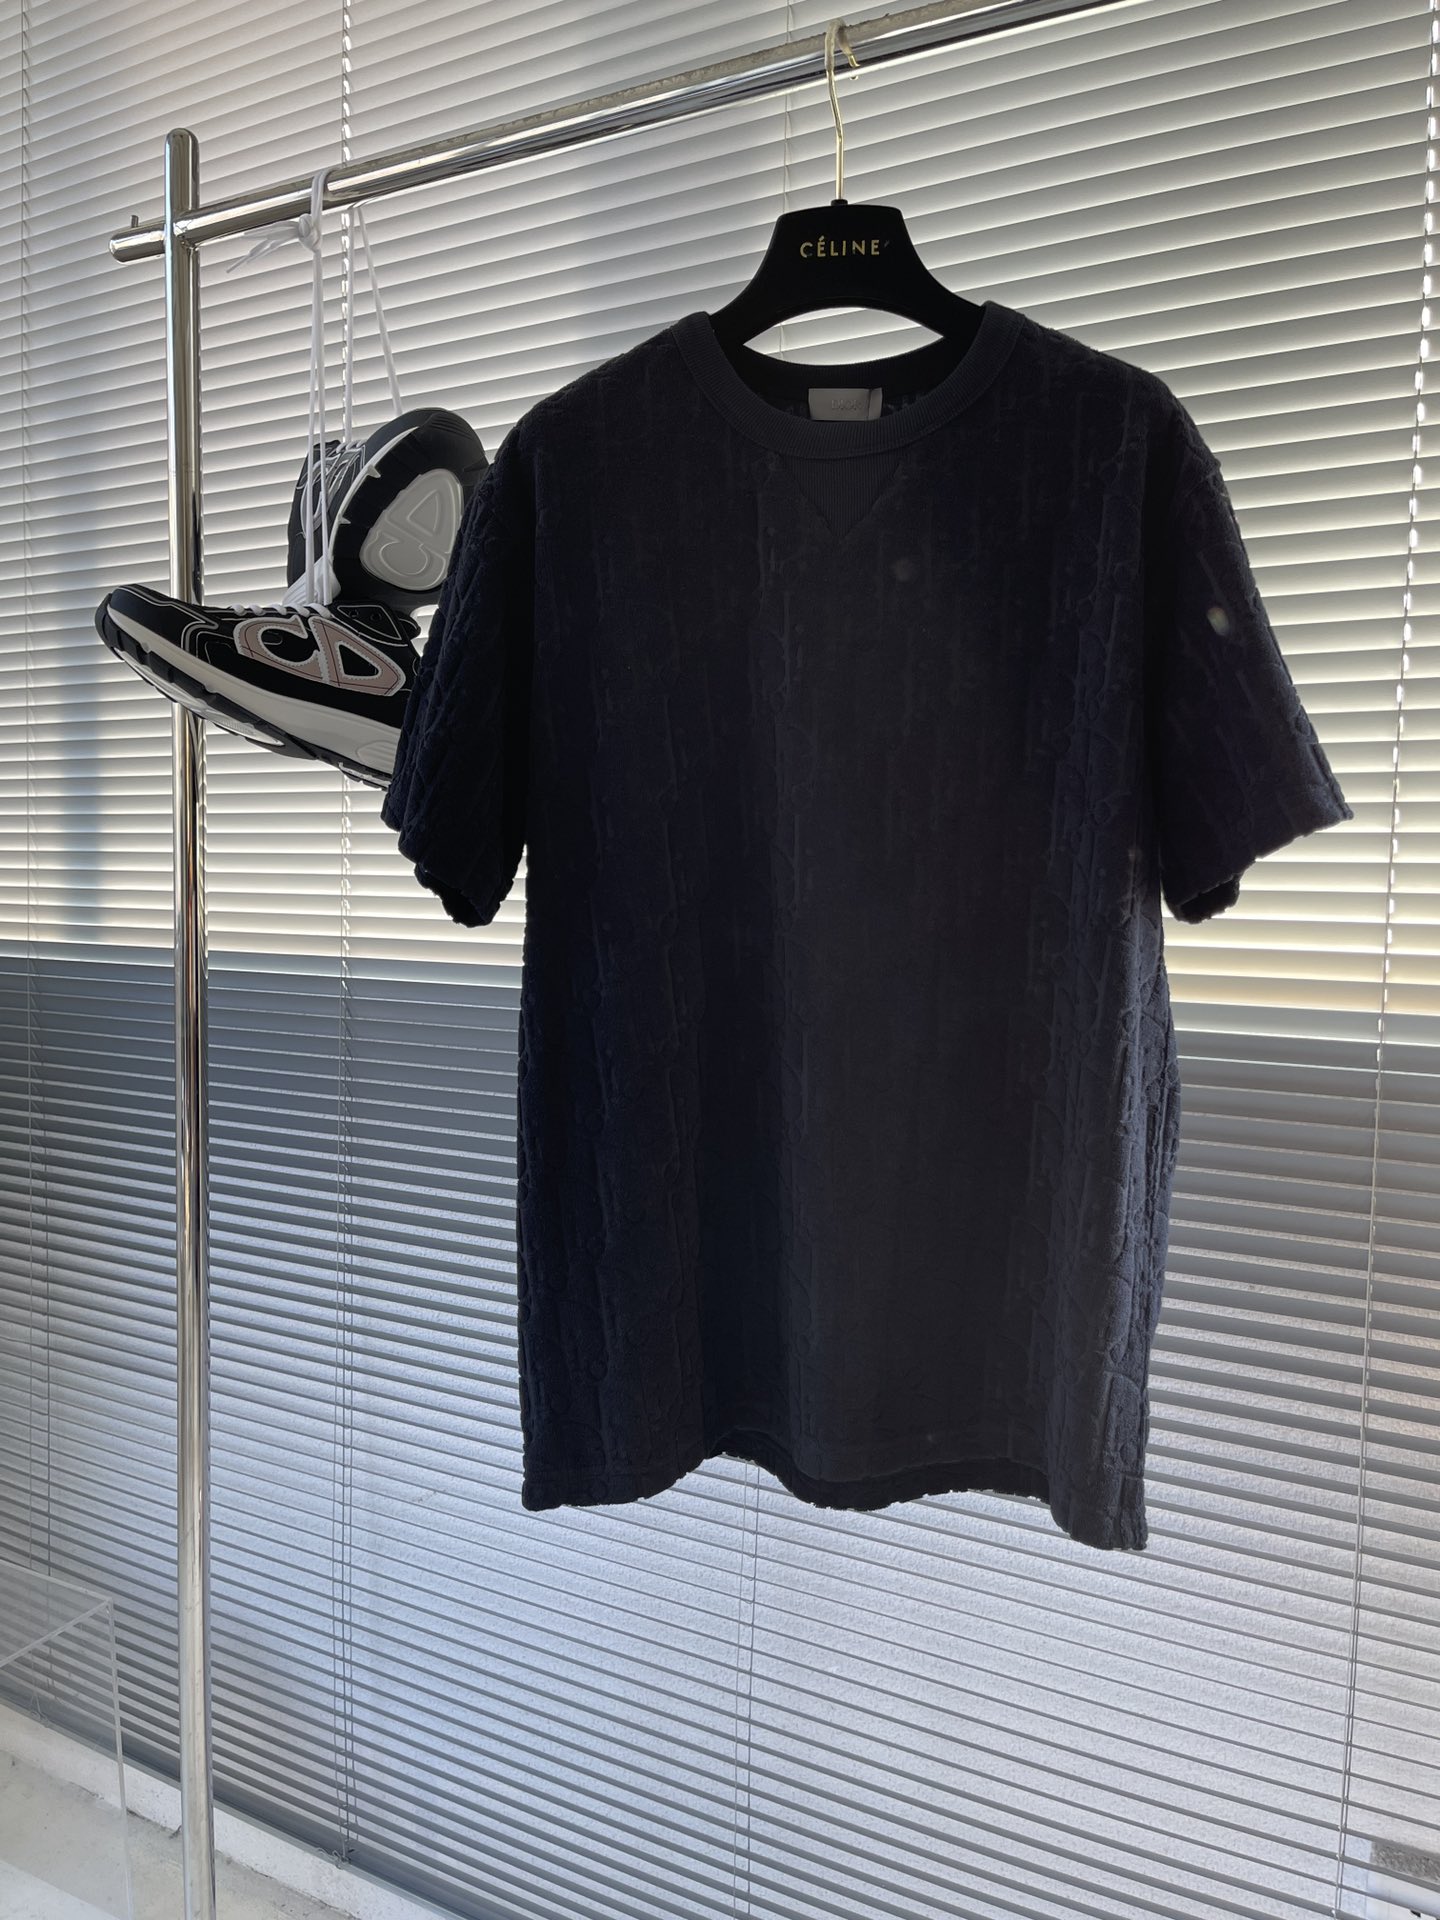 Dior Clothing T-Shirt Black Blue Brown Dark Sky White Unisex Cotton Spring Collection Fashion Short Sleeve